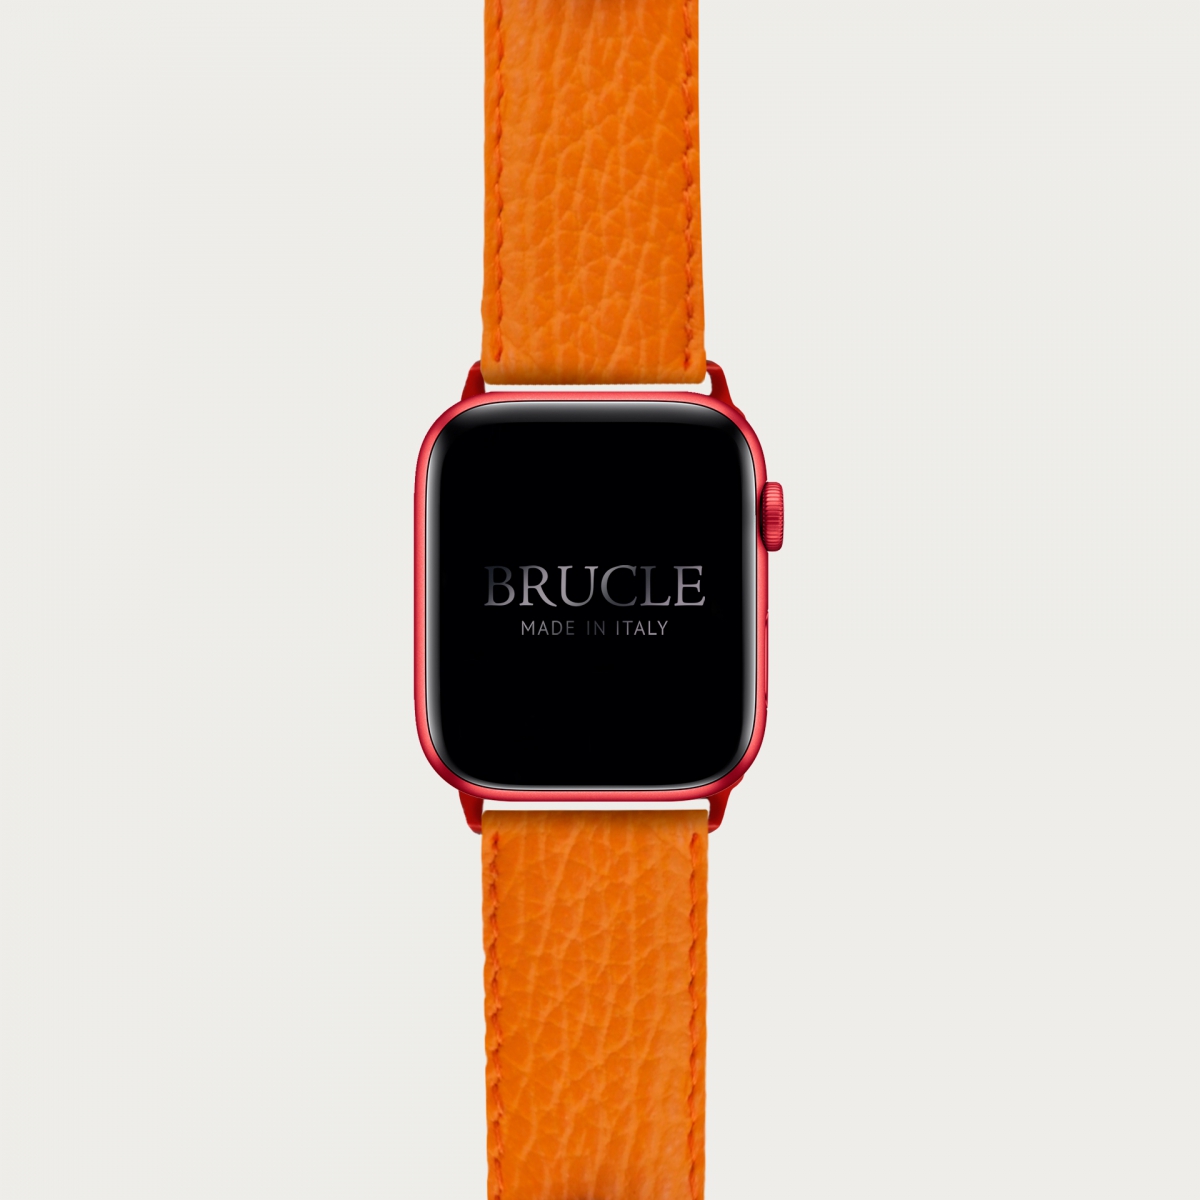 Cinturino arancio in pelle stampa dollaro per orologio, Apple Watch e Samsung Galaxy Watch